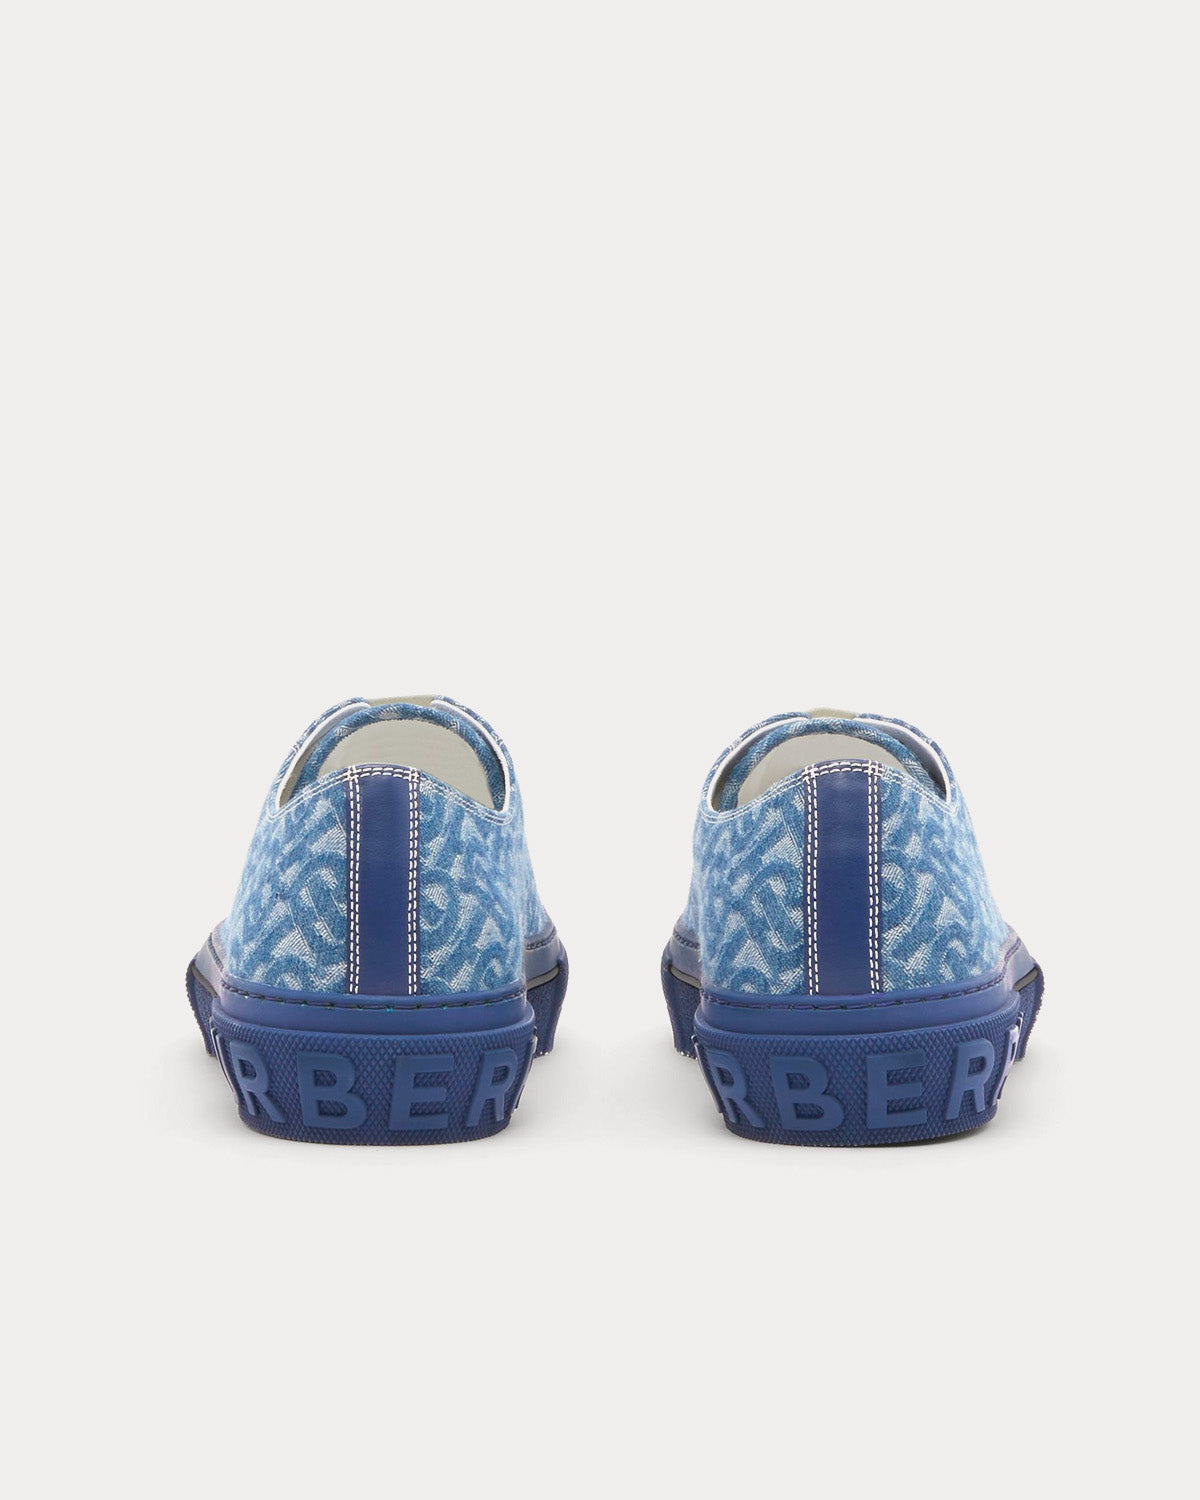 Burberry - Monogram Denim Blue Low Top Sneakers